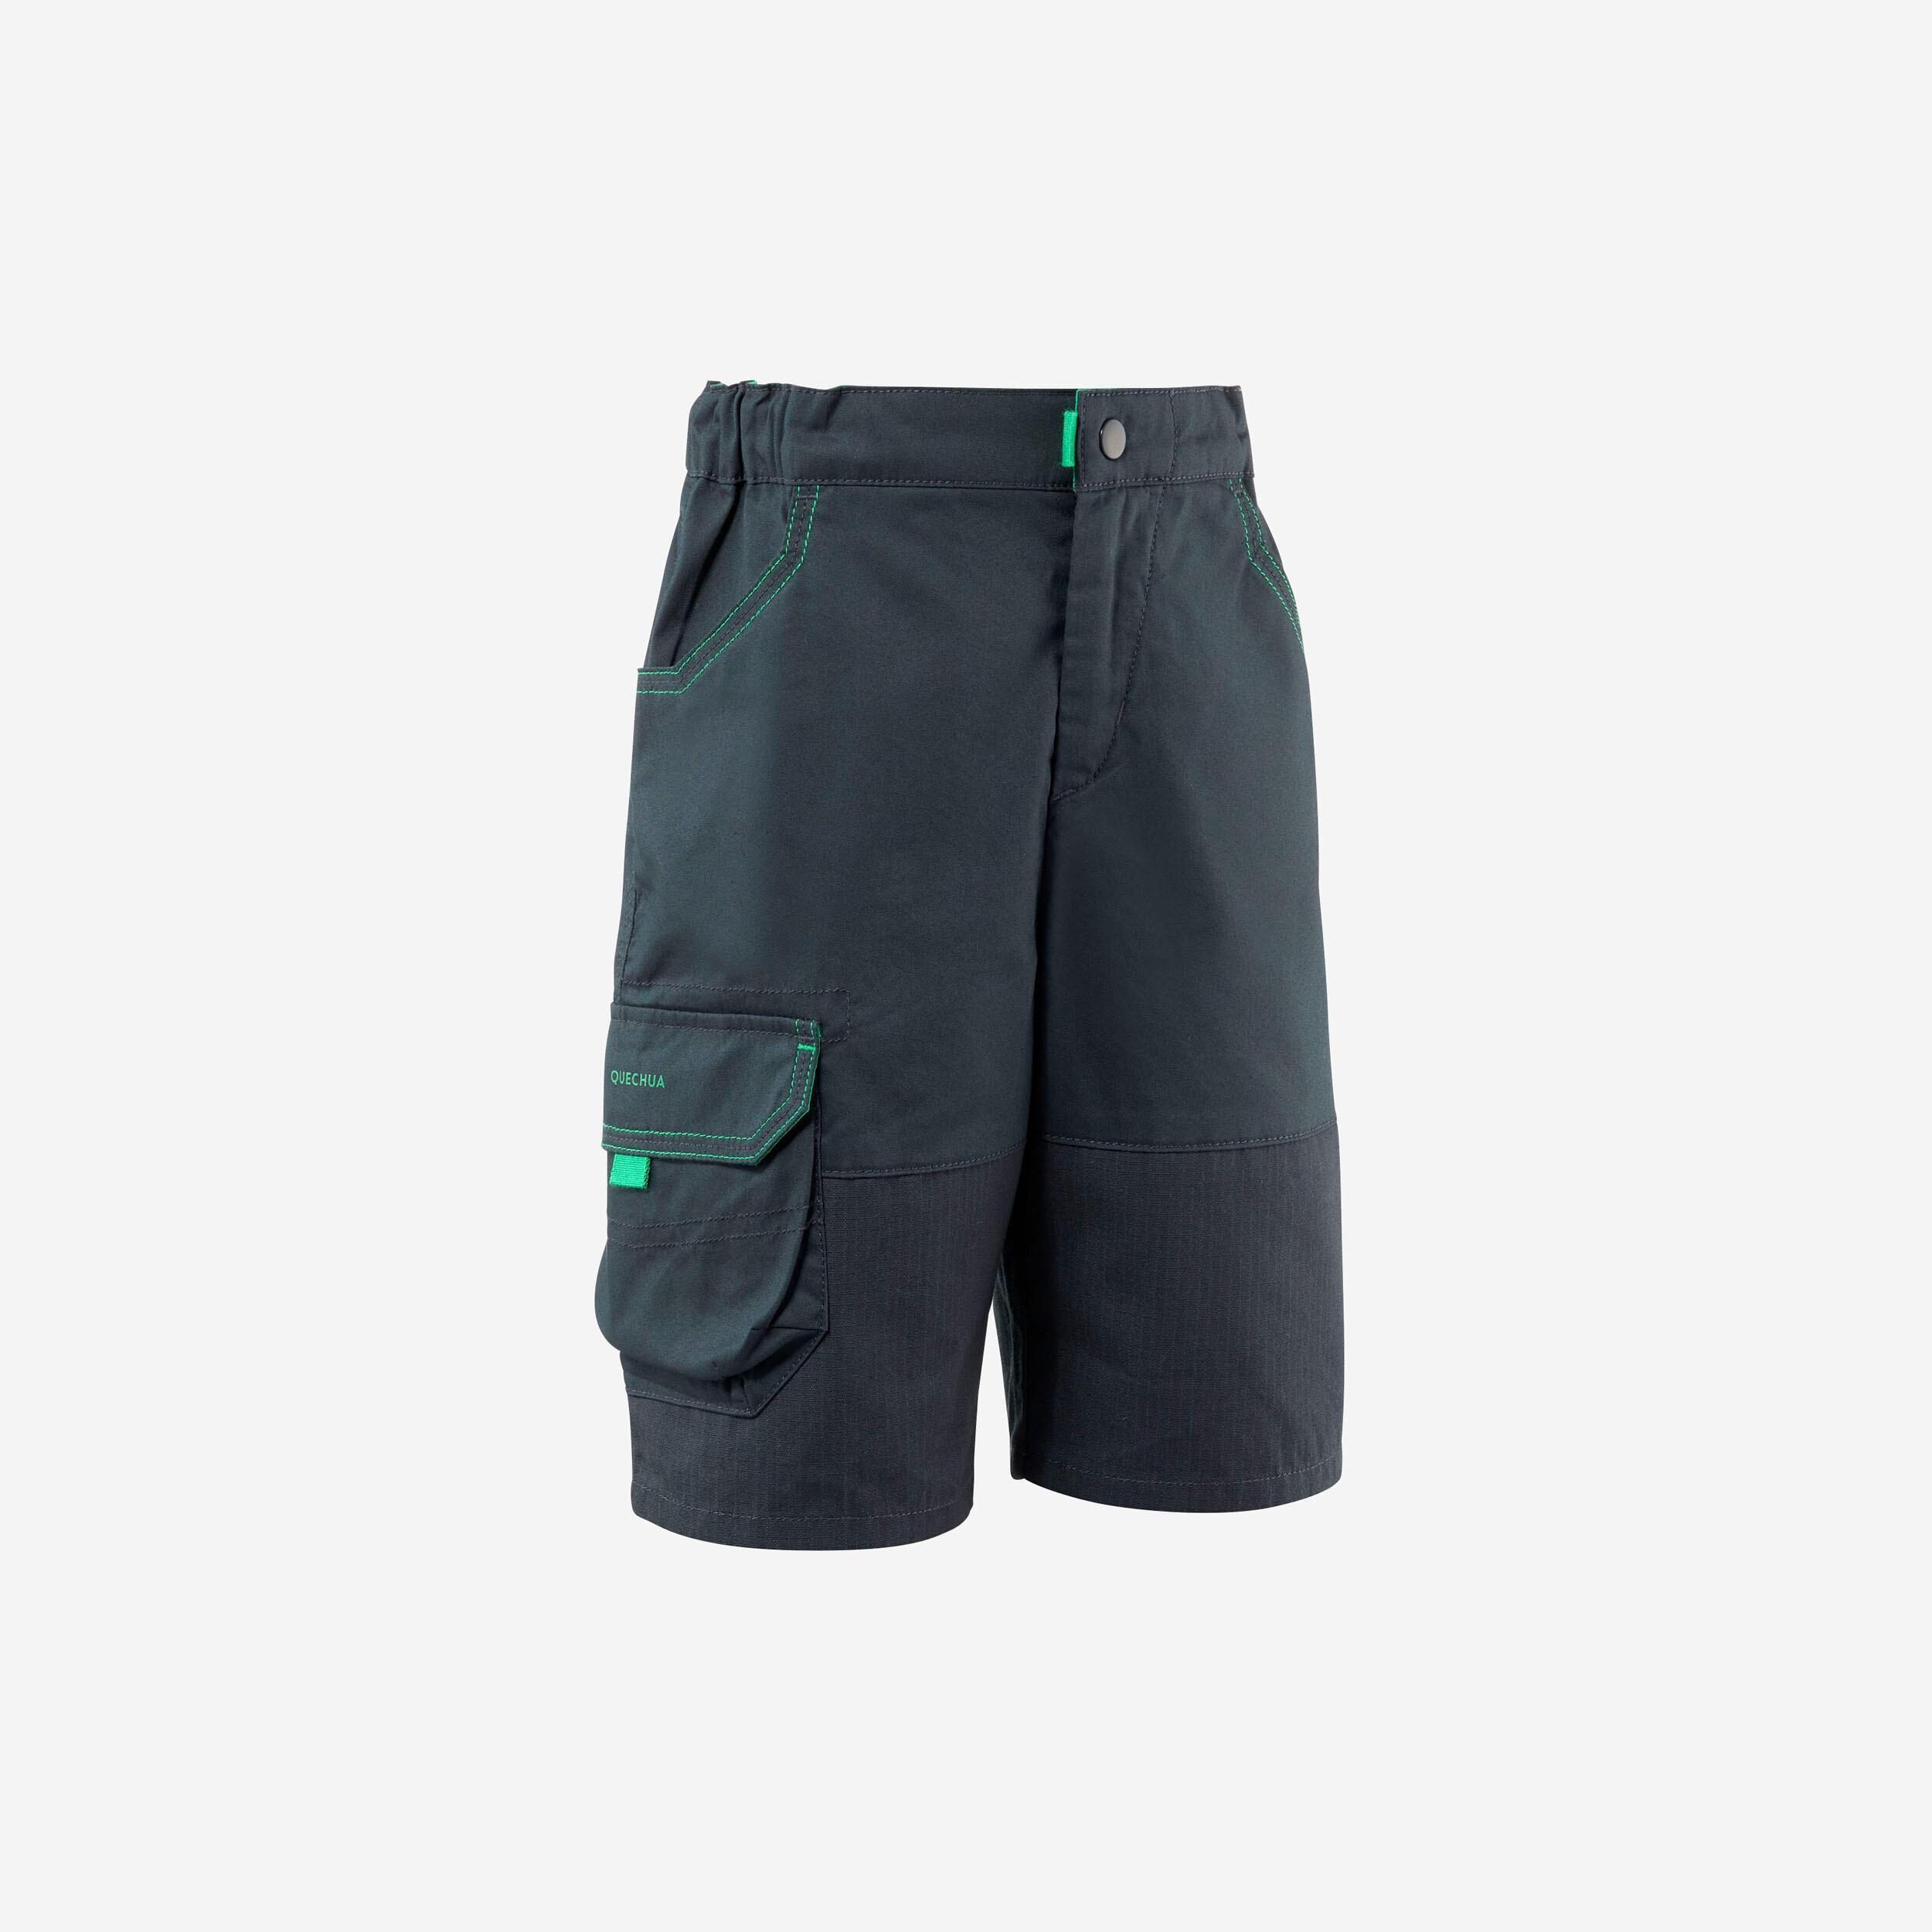 QUECHUA Kids’ hiking shorts - MH500 KID dark grey - 2-6 years old